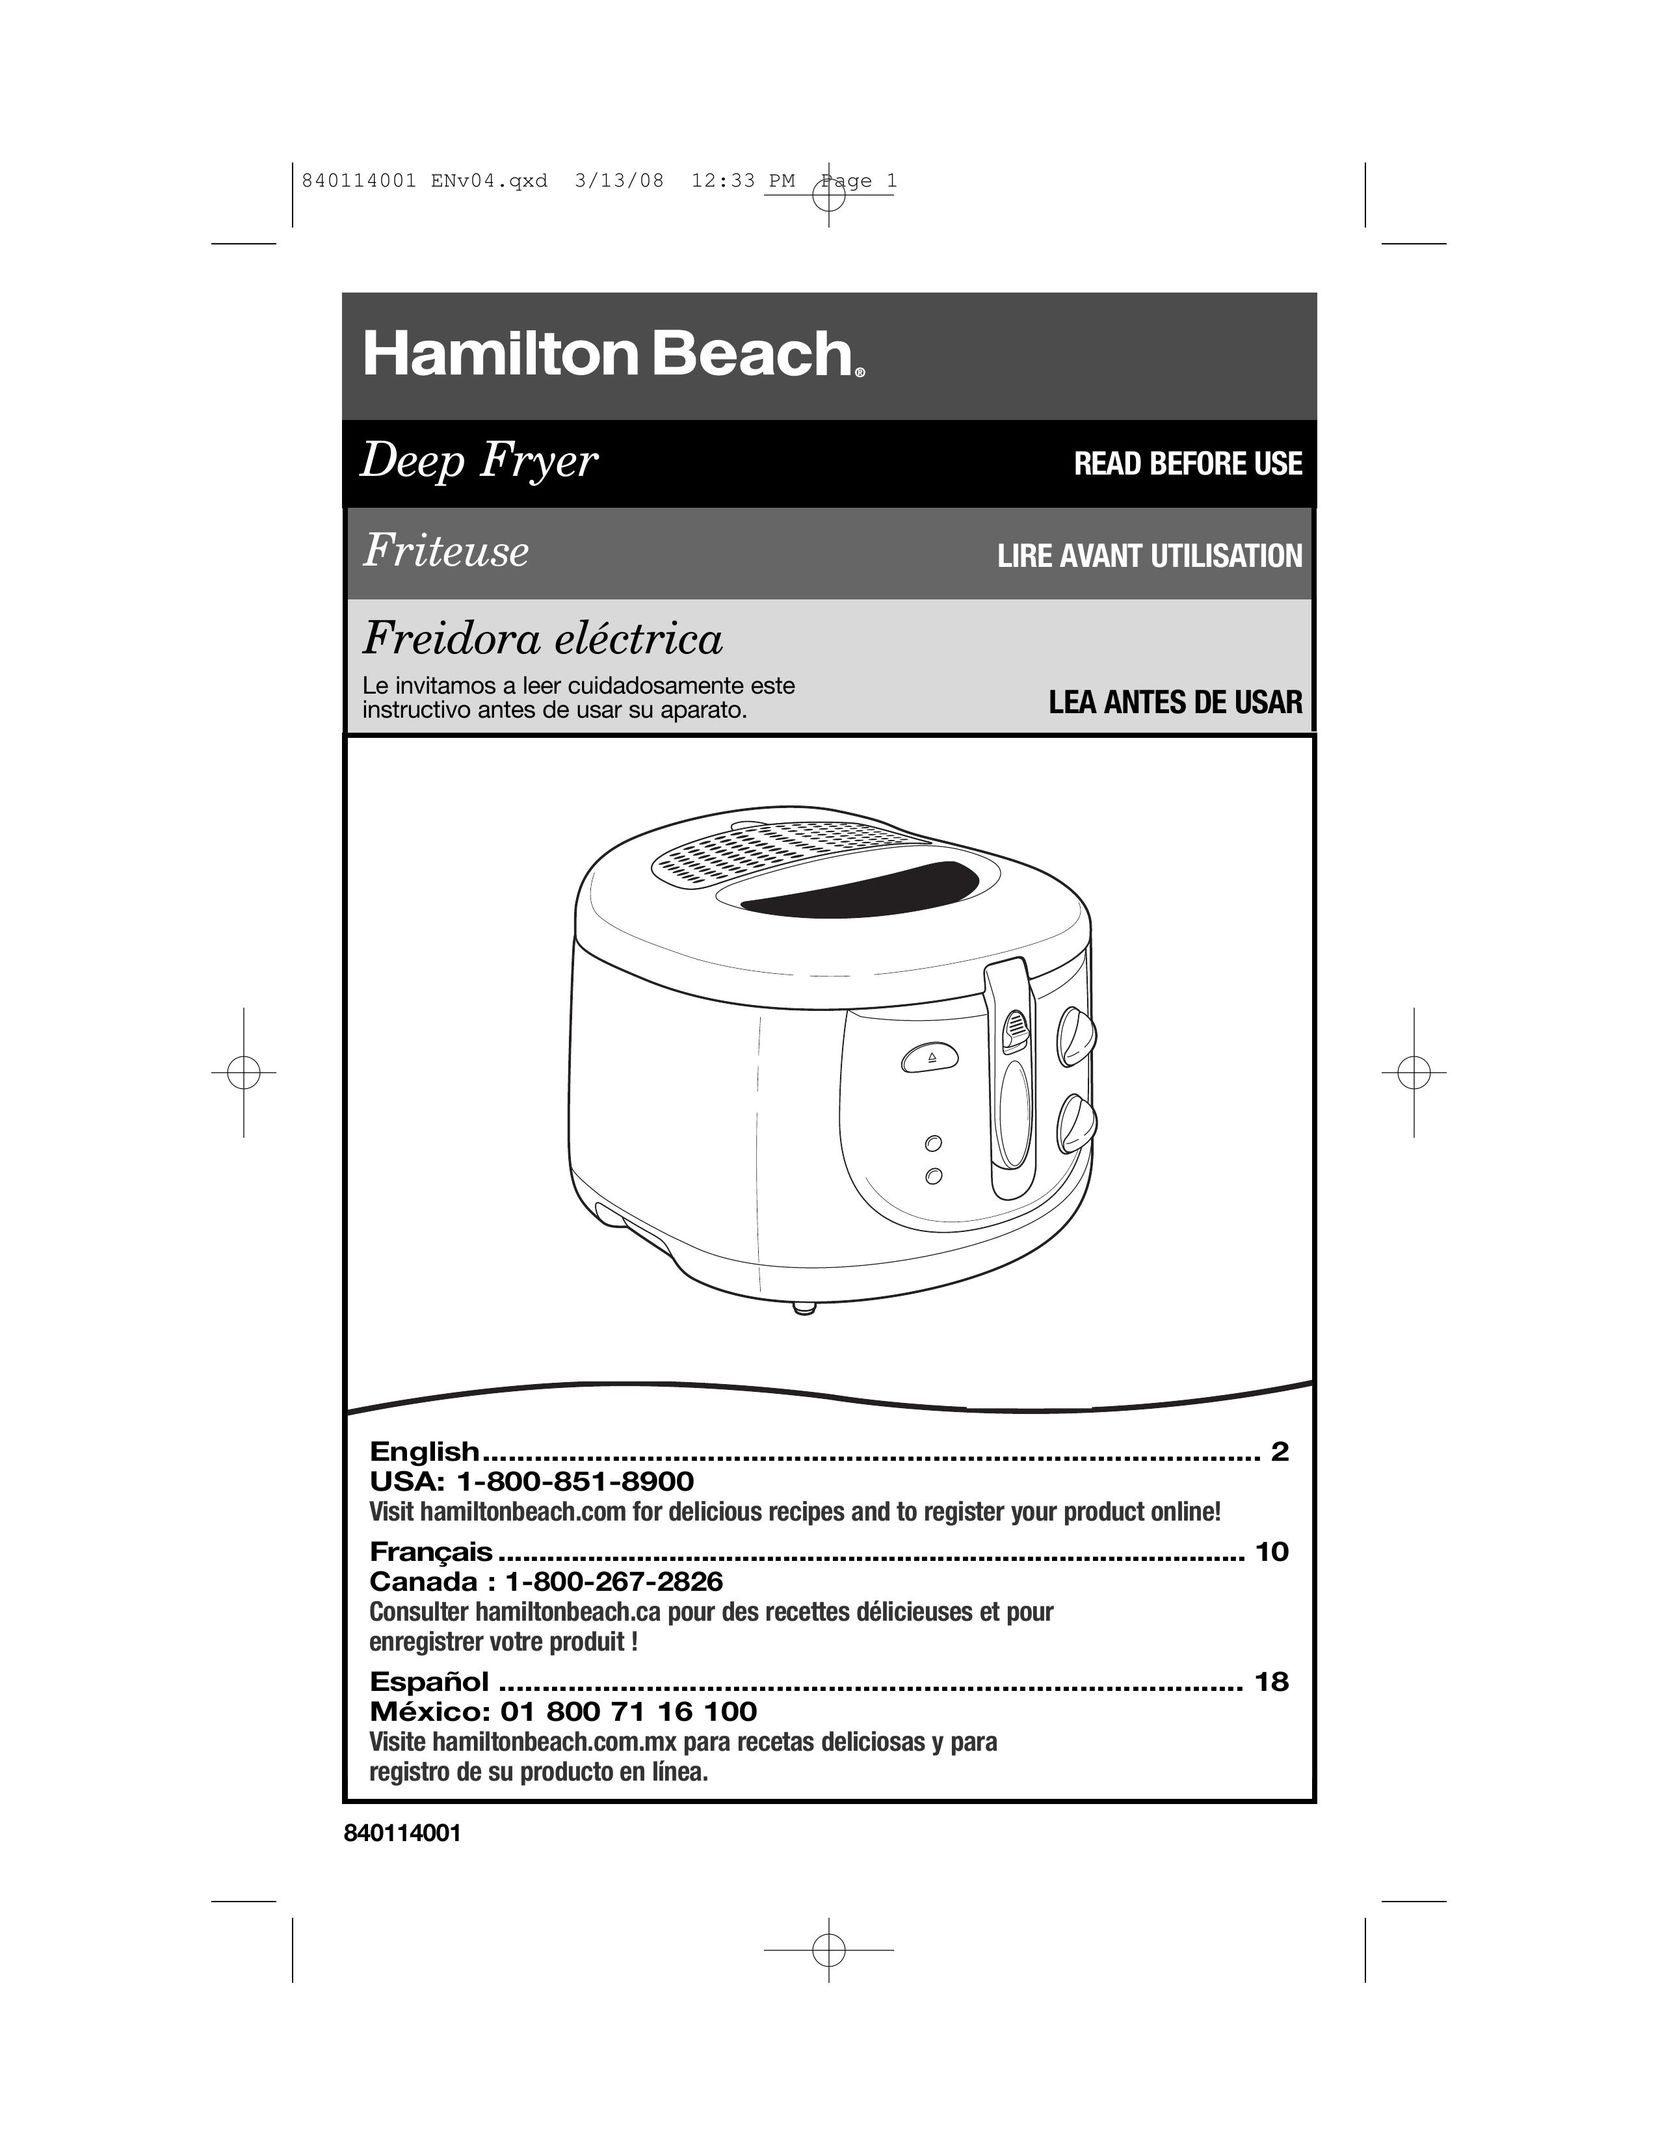 Hamilton Beach 840114001 Fryer User Manual